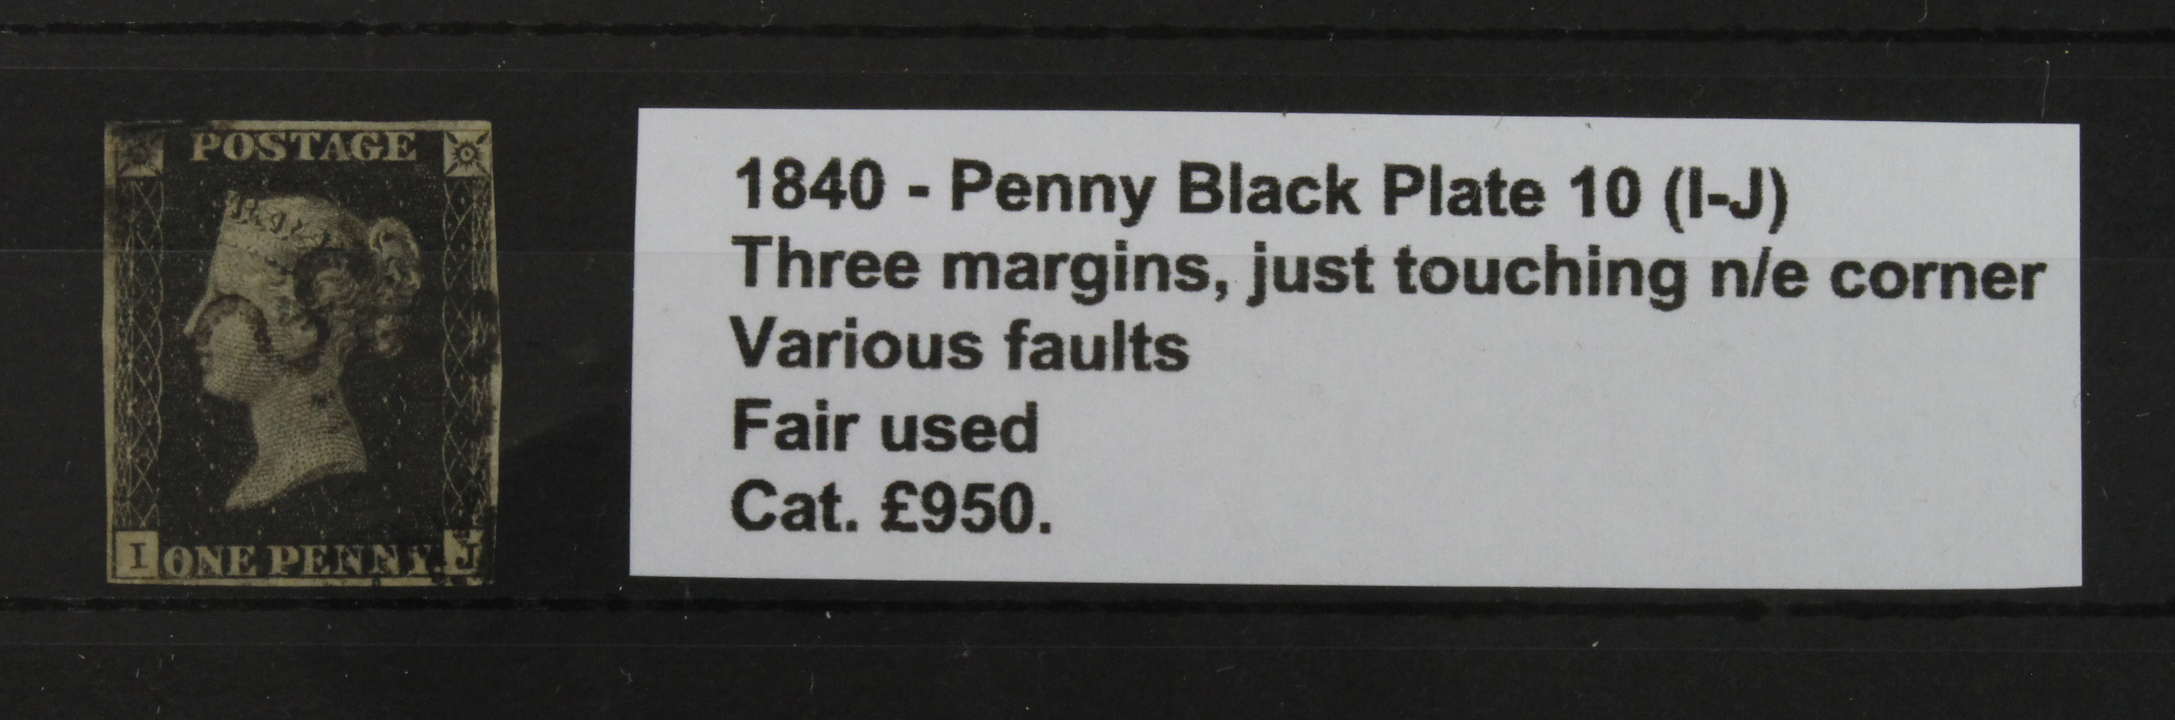 GB - 1840 QV Penny Black Plate 10 (I-J) three margins, just touching n/e corner, various faults,